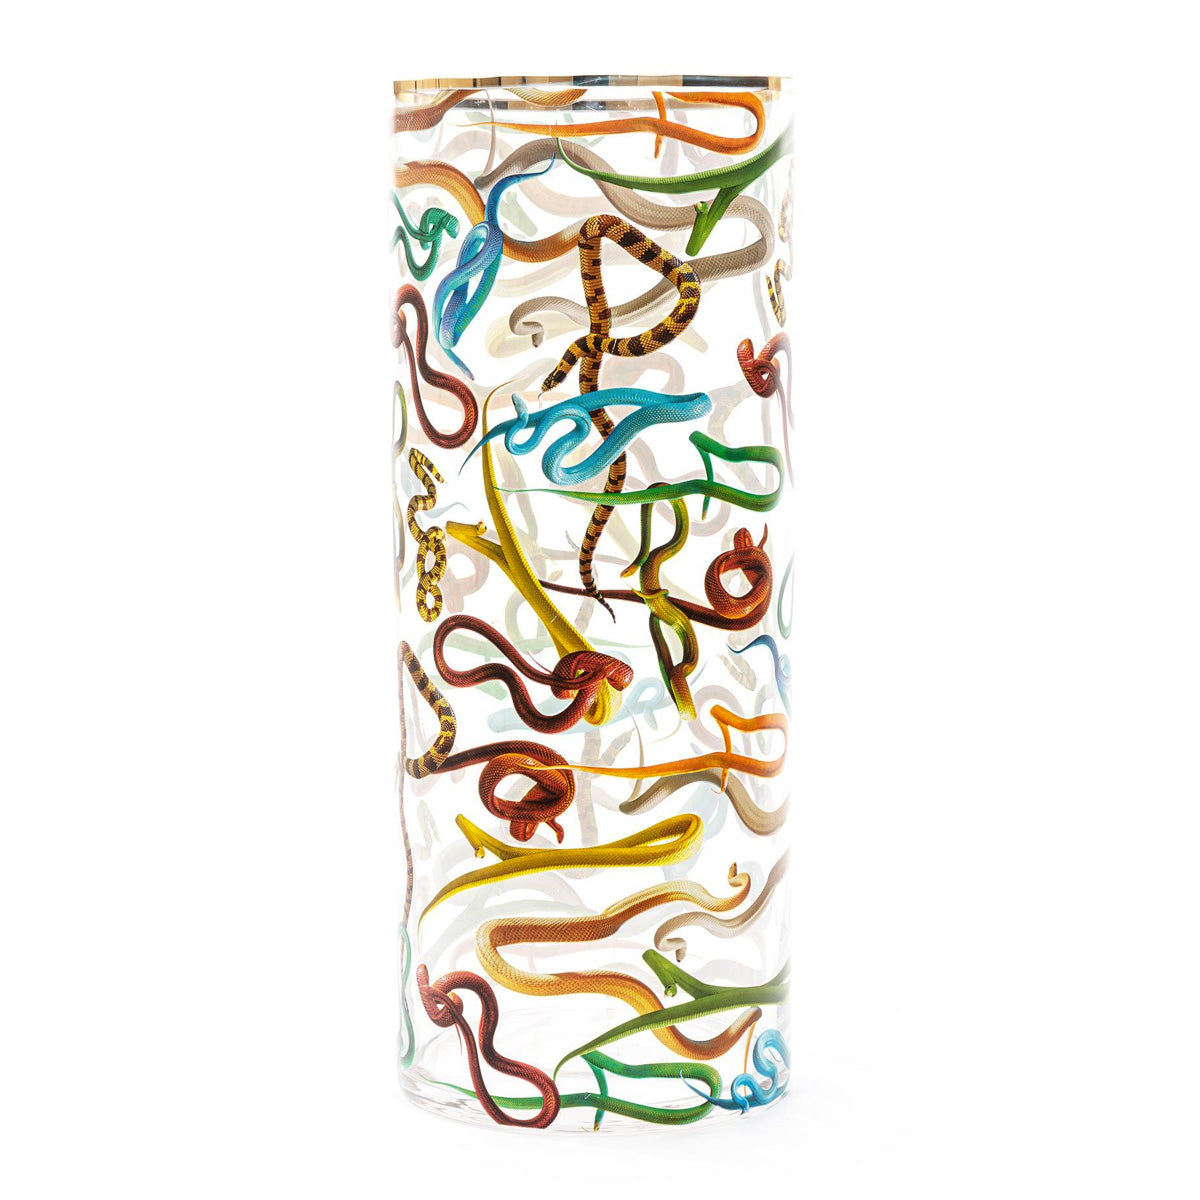 Seletti X Toiletpaper &#39;Snakes&#39; Cylindrical Glass Vase